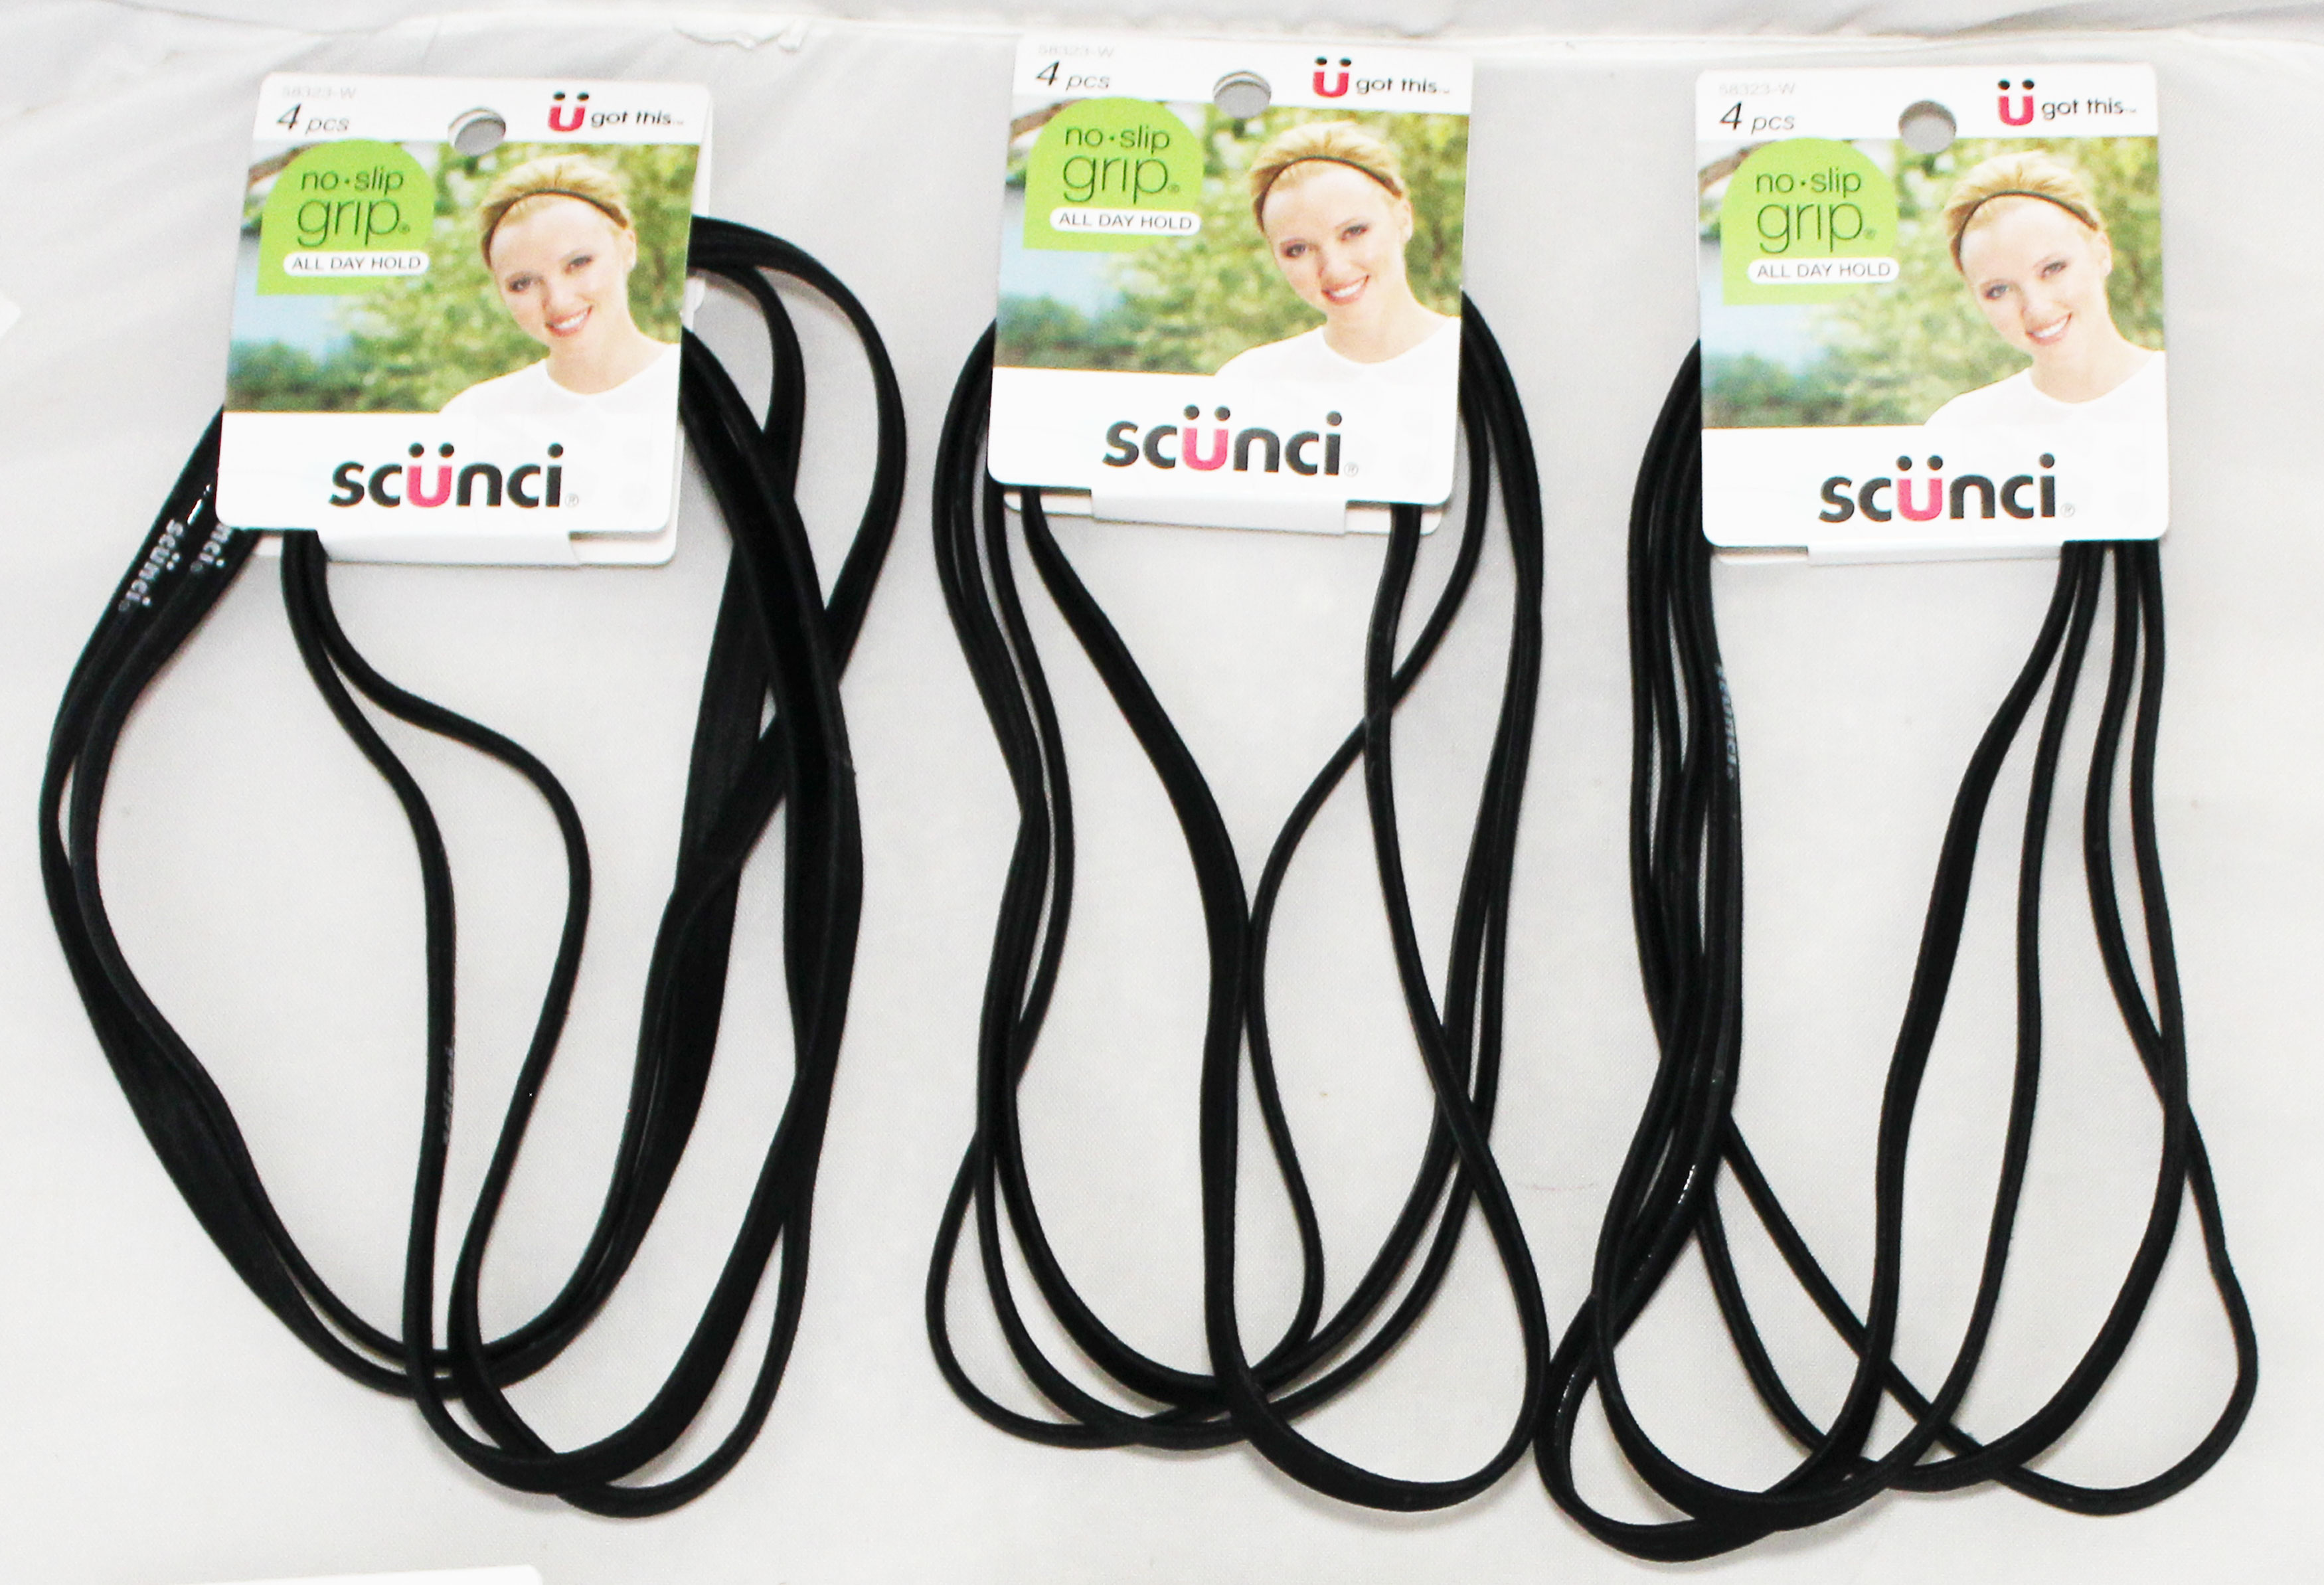 Scunci No Slip Grip Headwrap Headband, 4/card (1 Pack)